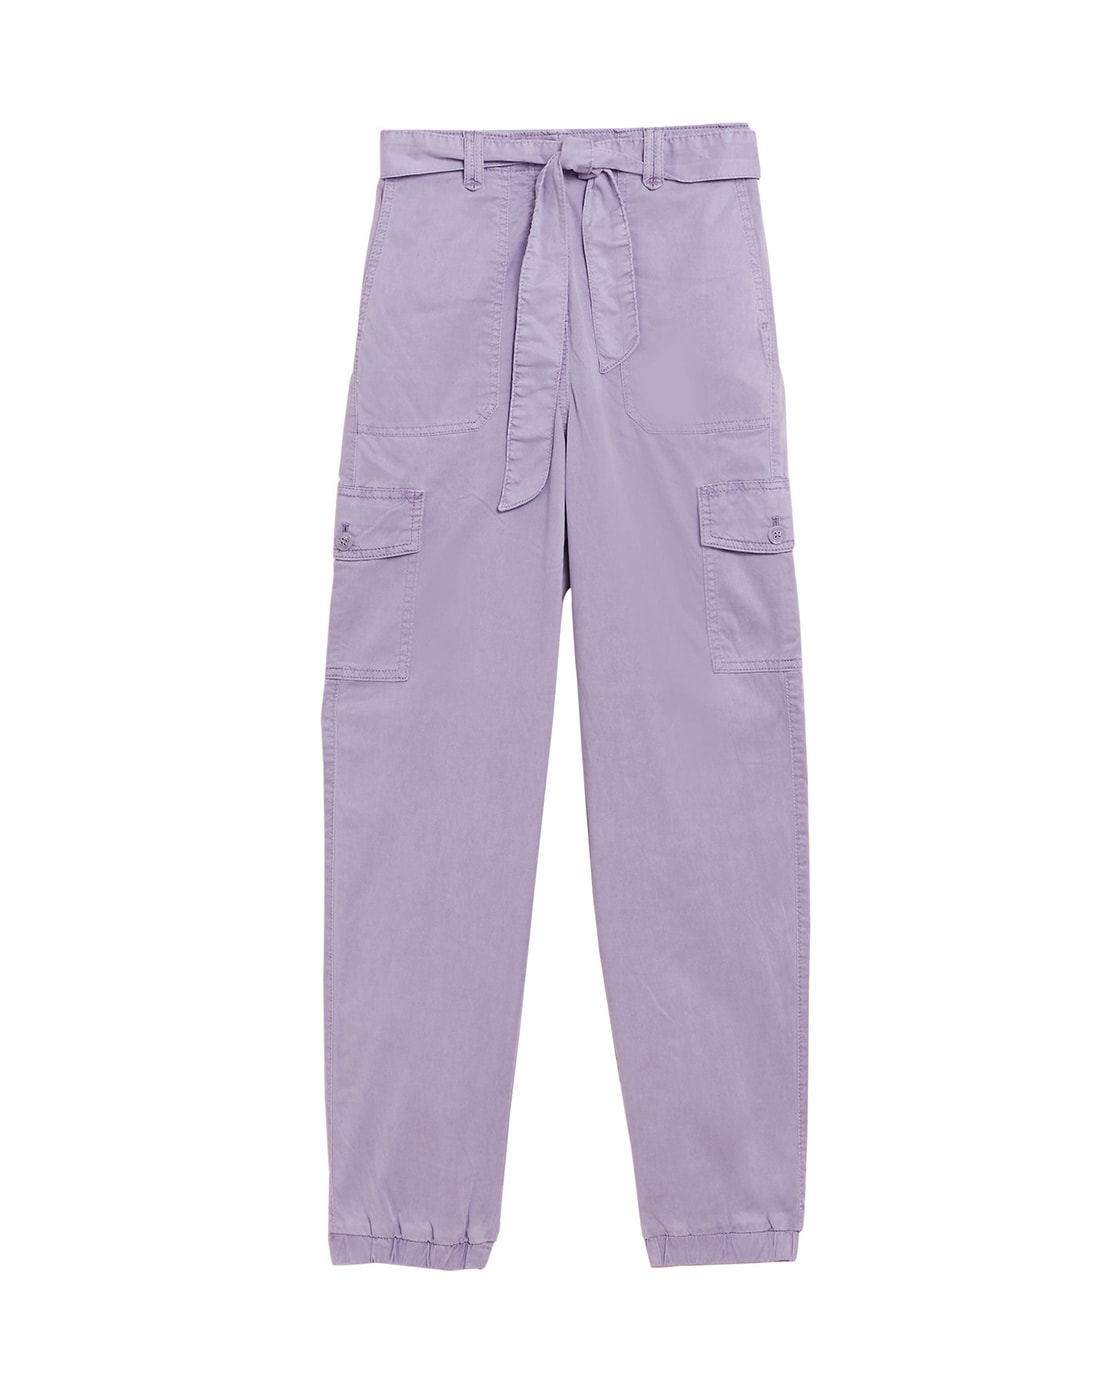 Amazoncom Purple Cargo Pants